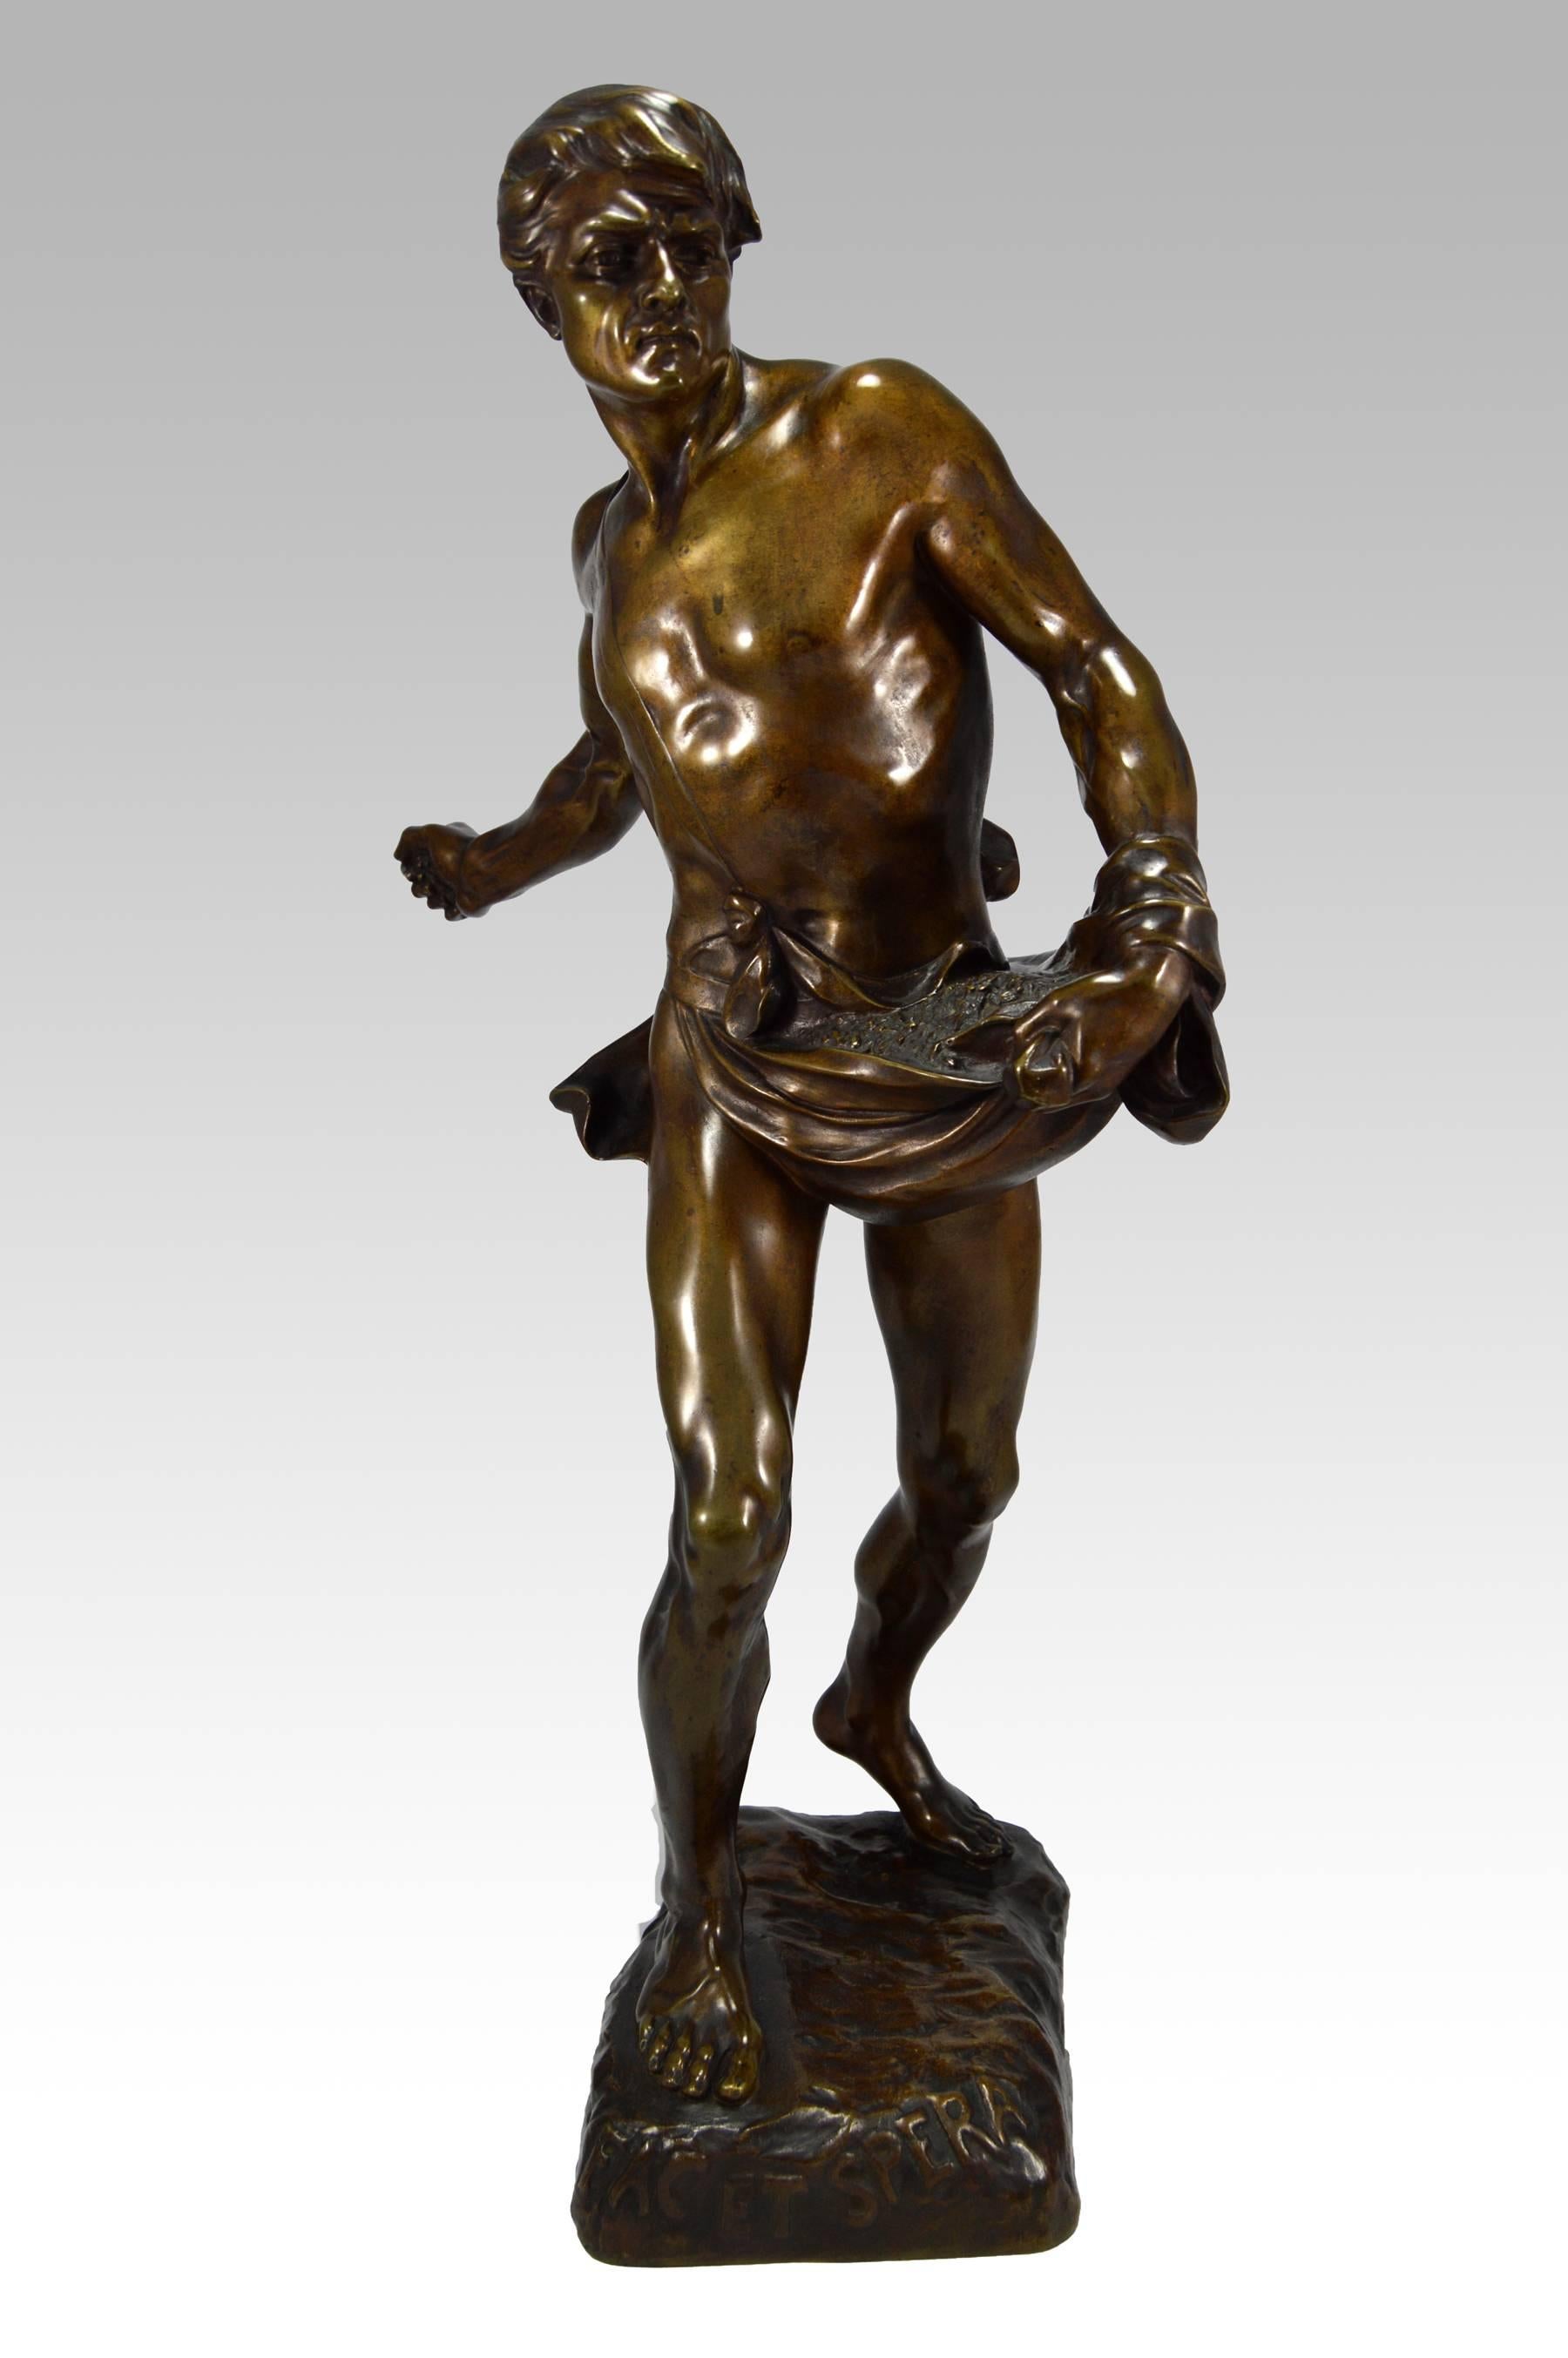 Henri Desire Gauquie Figurative Sculpture - 19th Century French bronze sculpture of a man sowing seeds